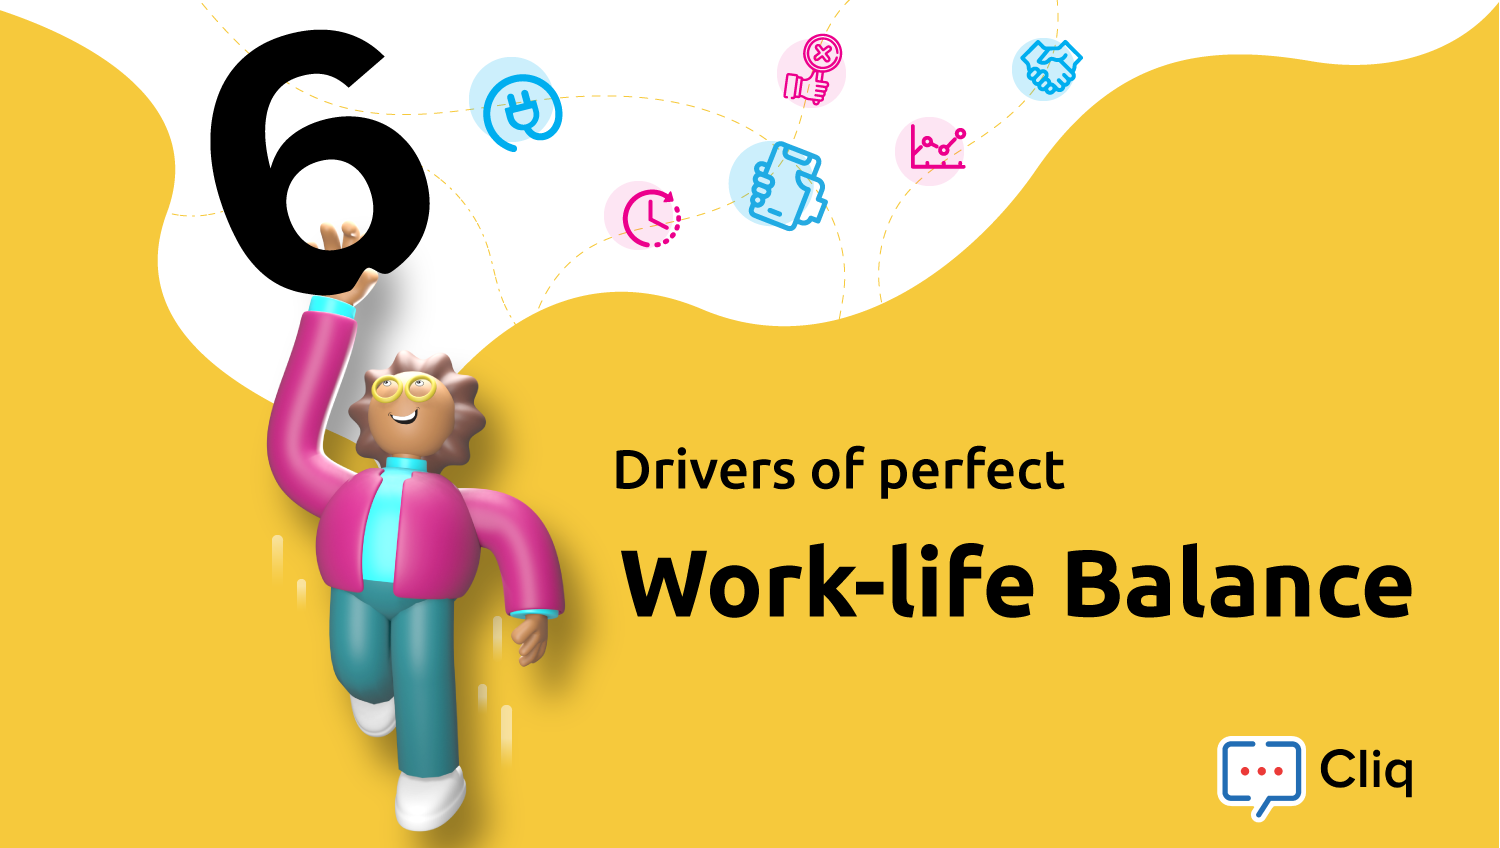 Six drivers of perfect work-life balance